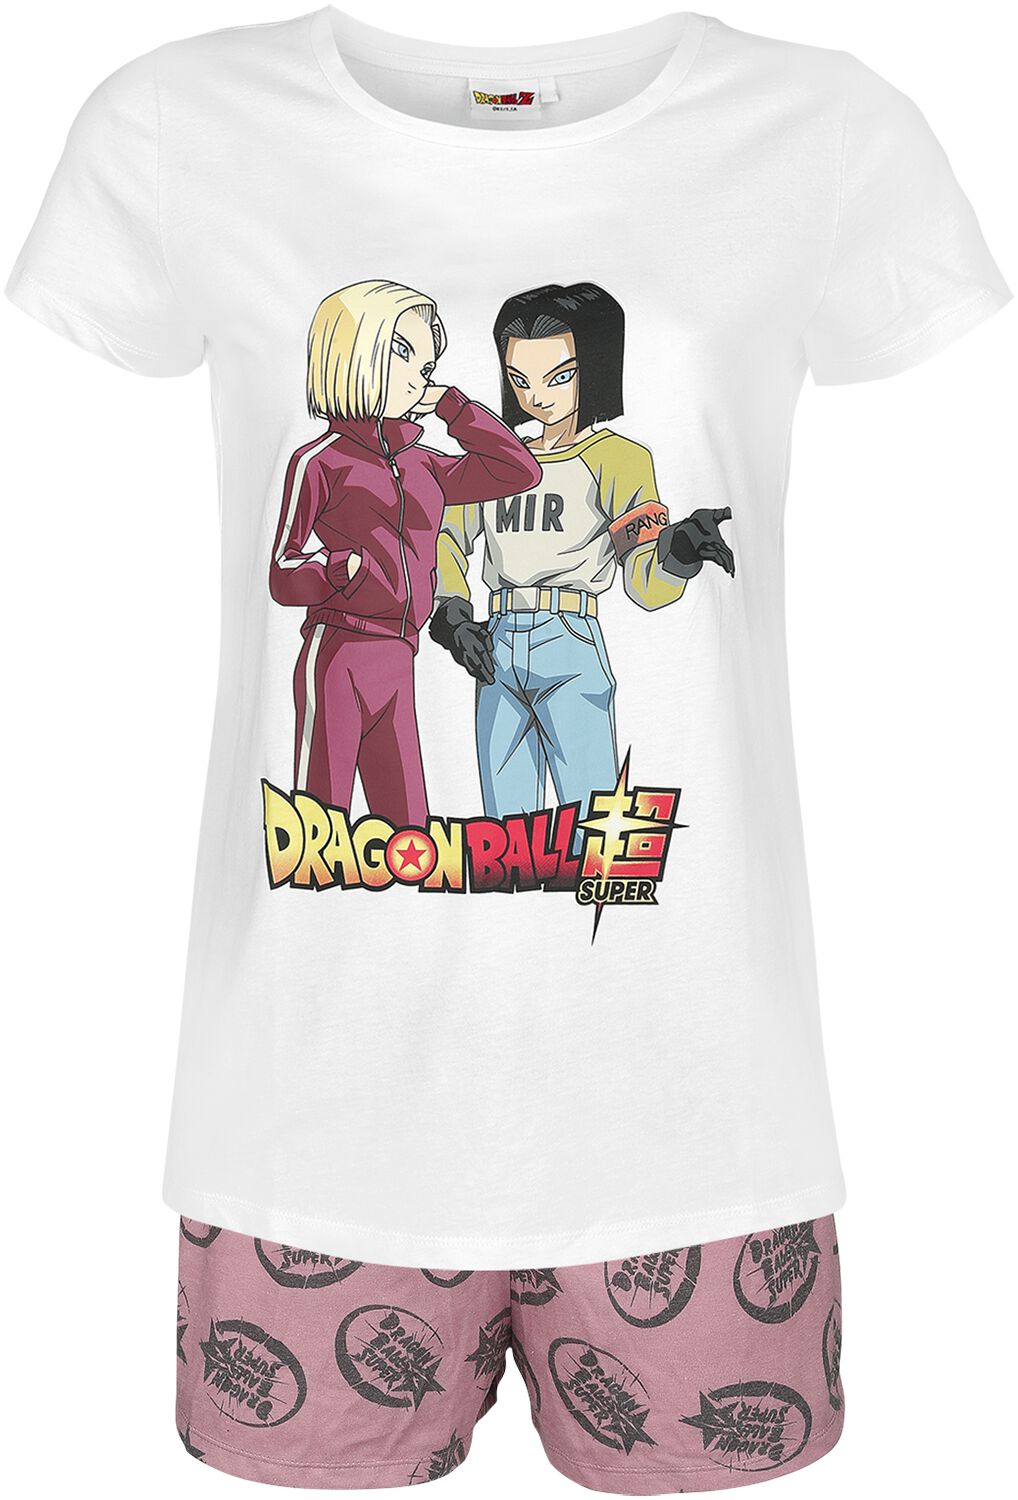 Pyjama Gaming de Dragon Ball - Super - Androids - S à 3XL - pour Femme - blanc/rose